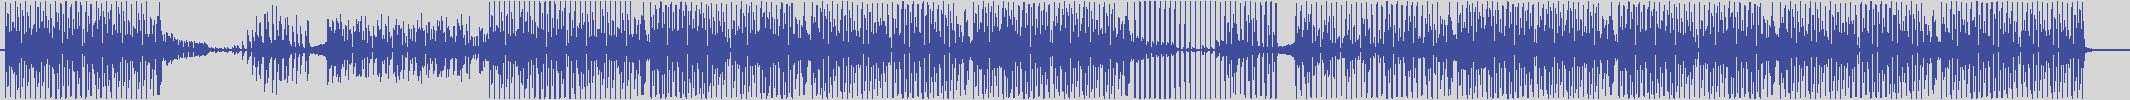 nf_boyz_records [NFY047] Ron Virgin - Halomon [K Zone Mix] audio wave form